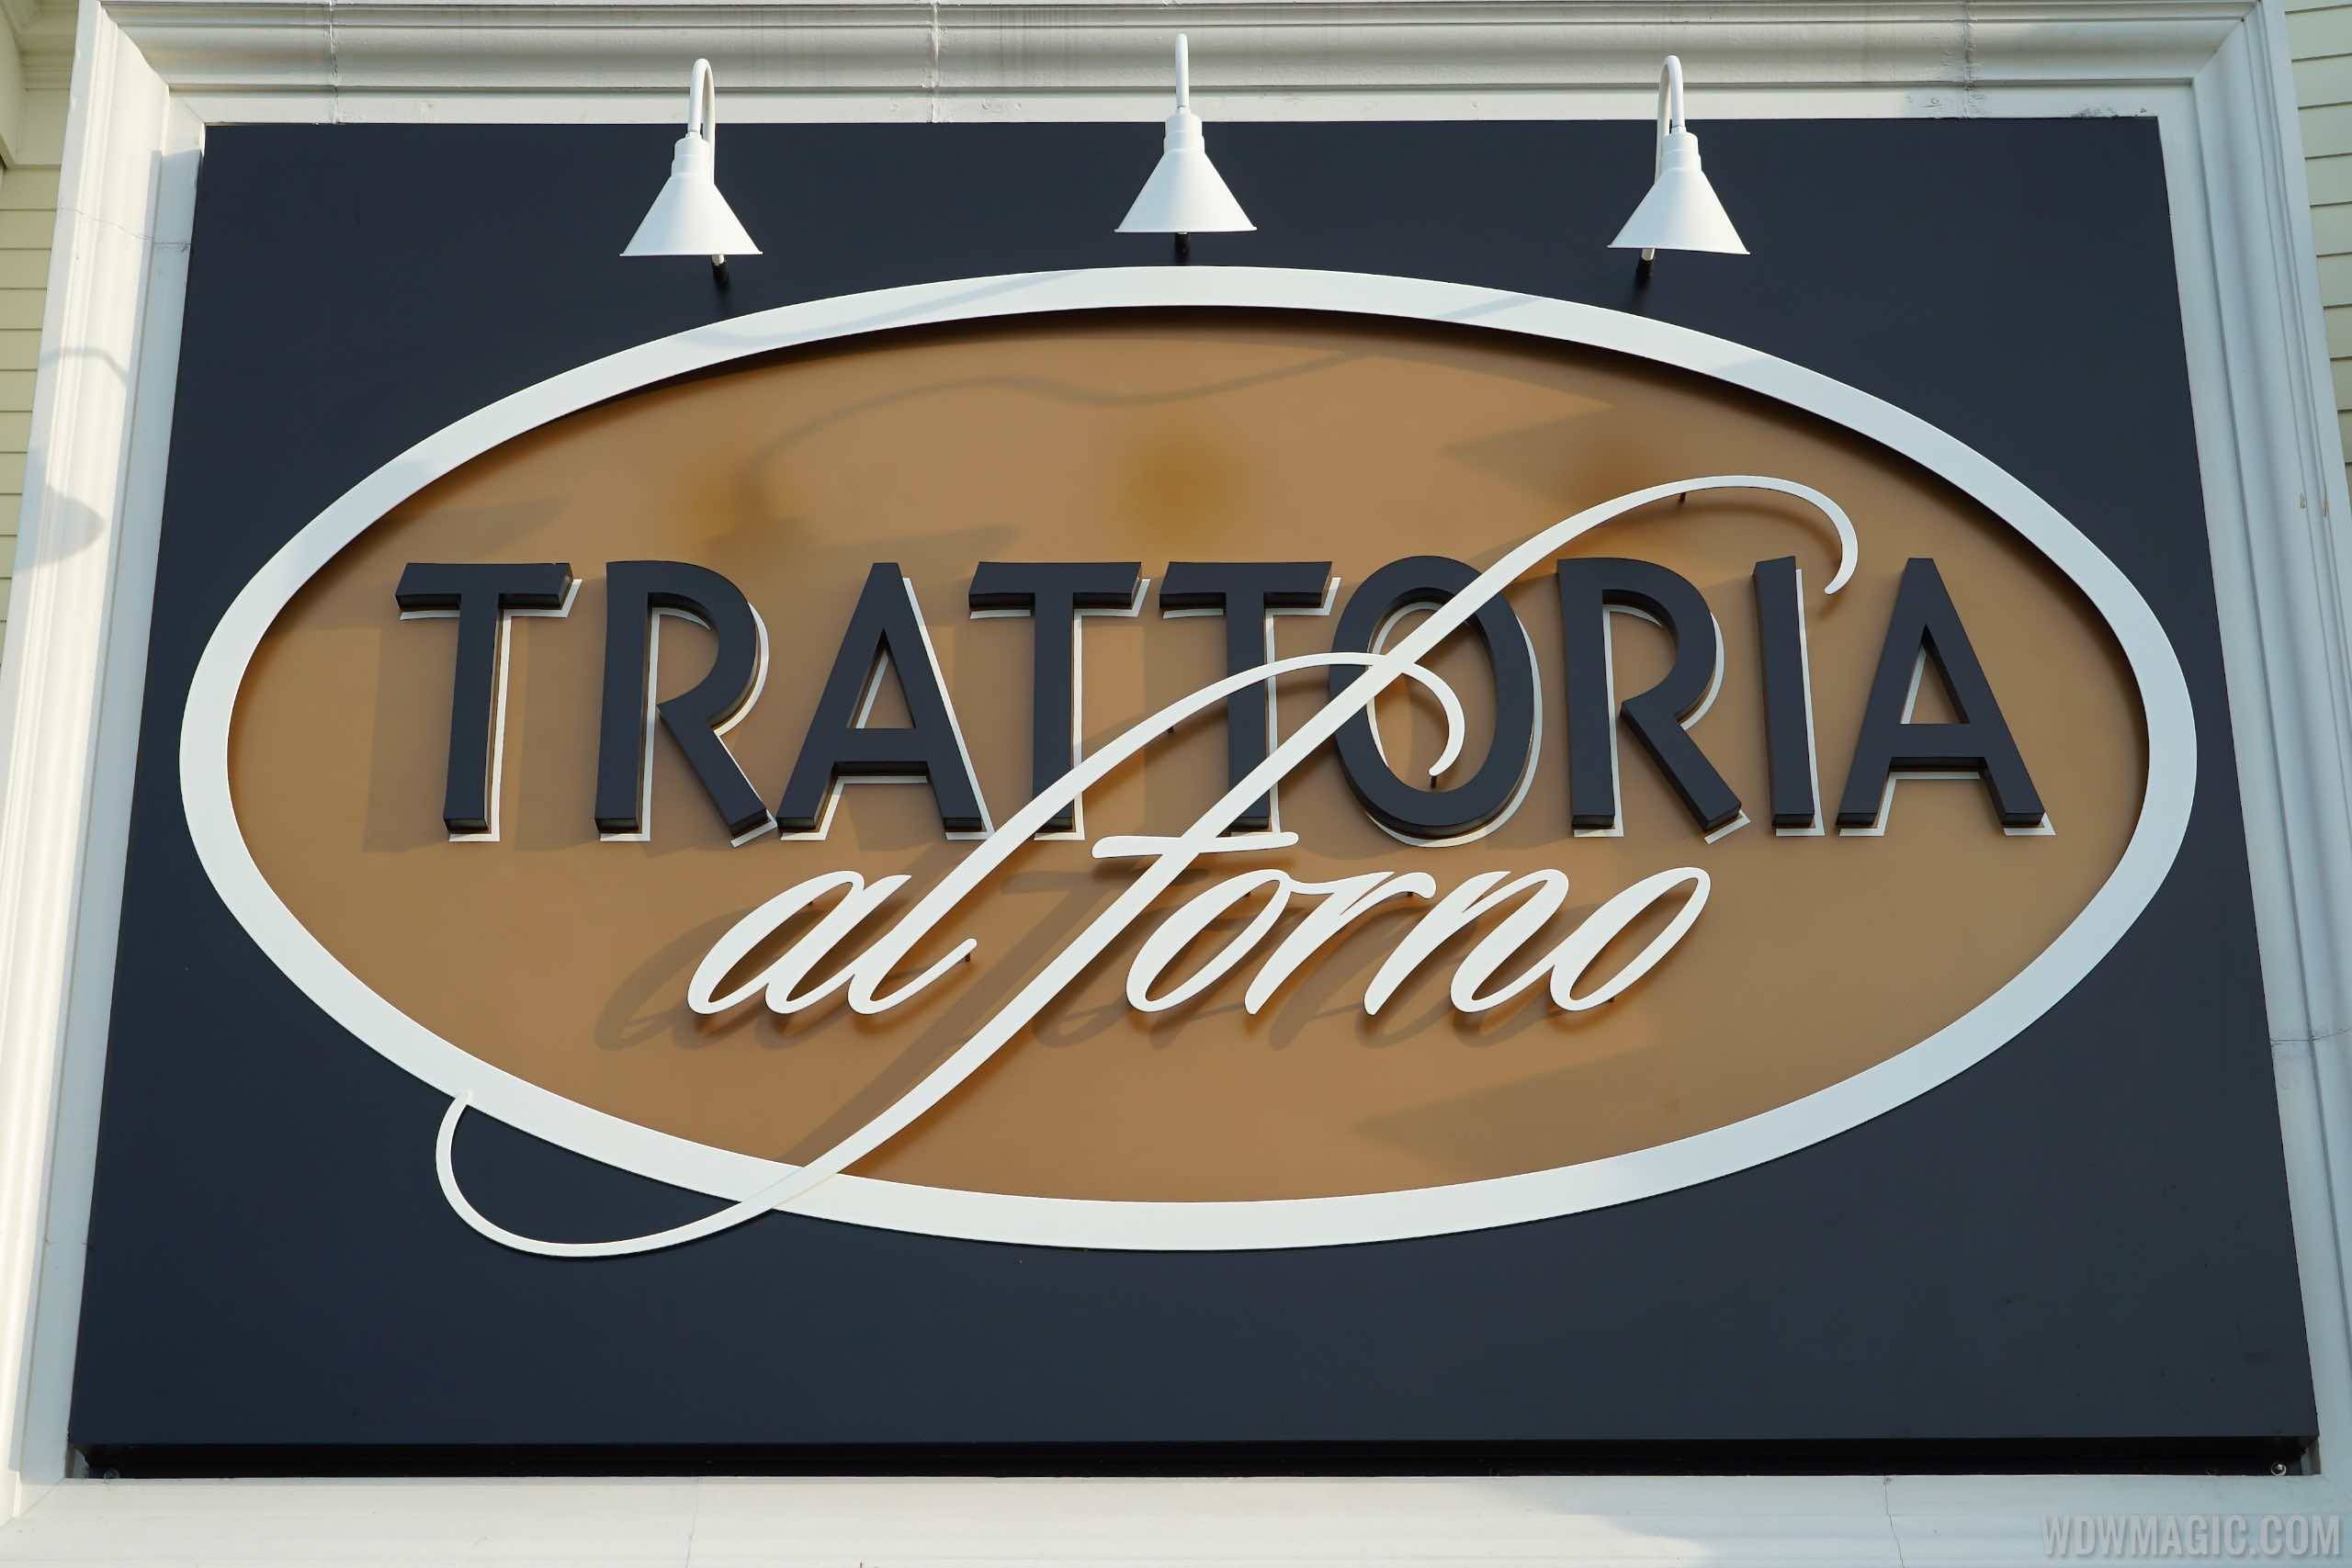 PHOTOS - Finishing touches on the BoardWalk's new Trattoria al Forno restaurant